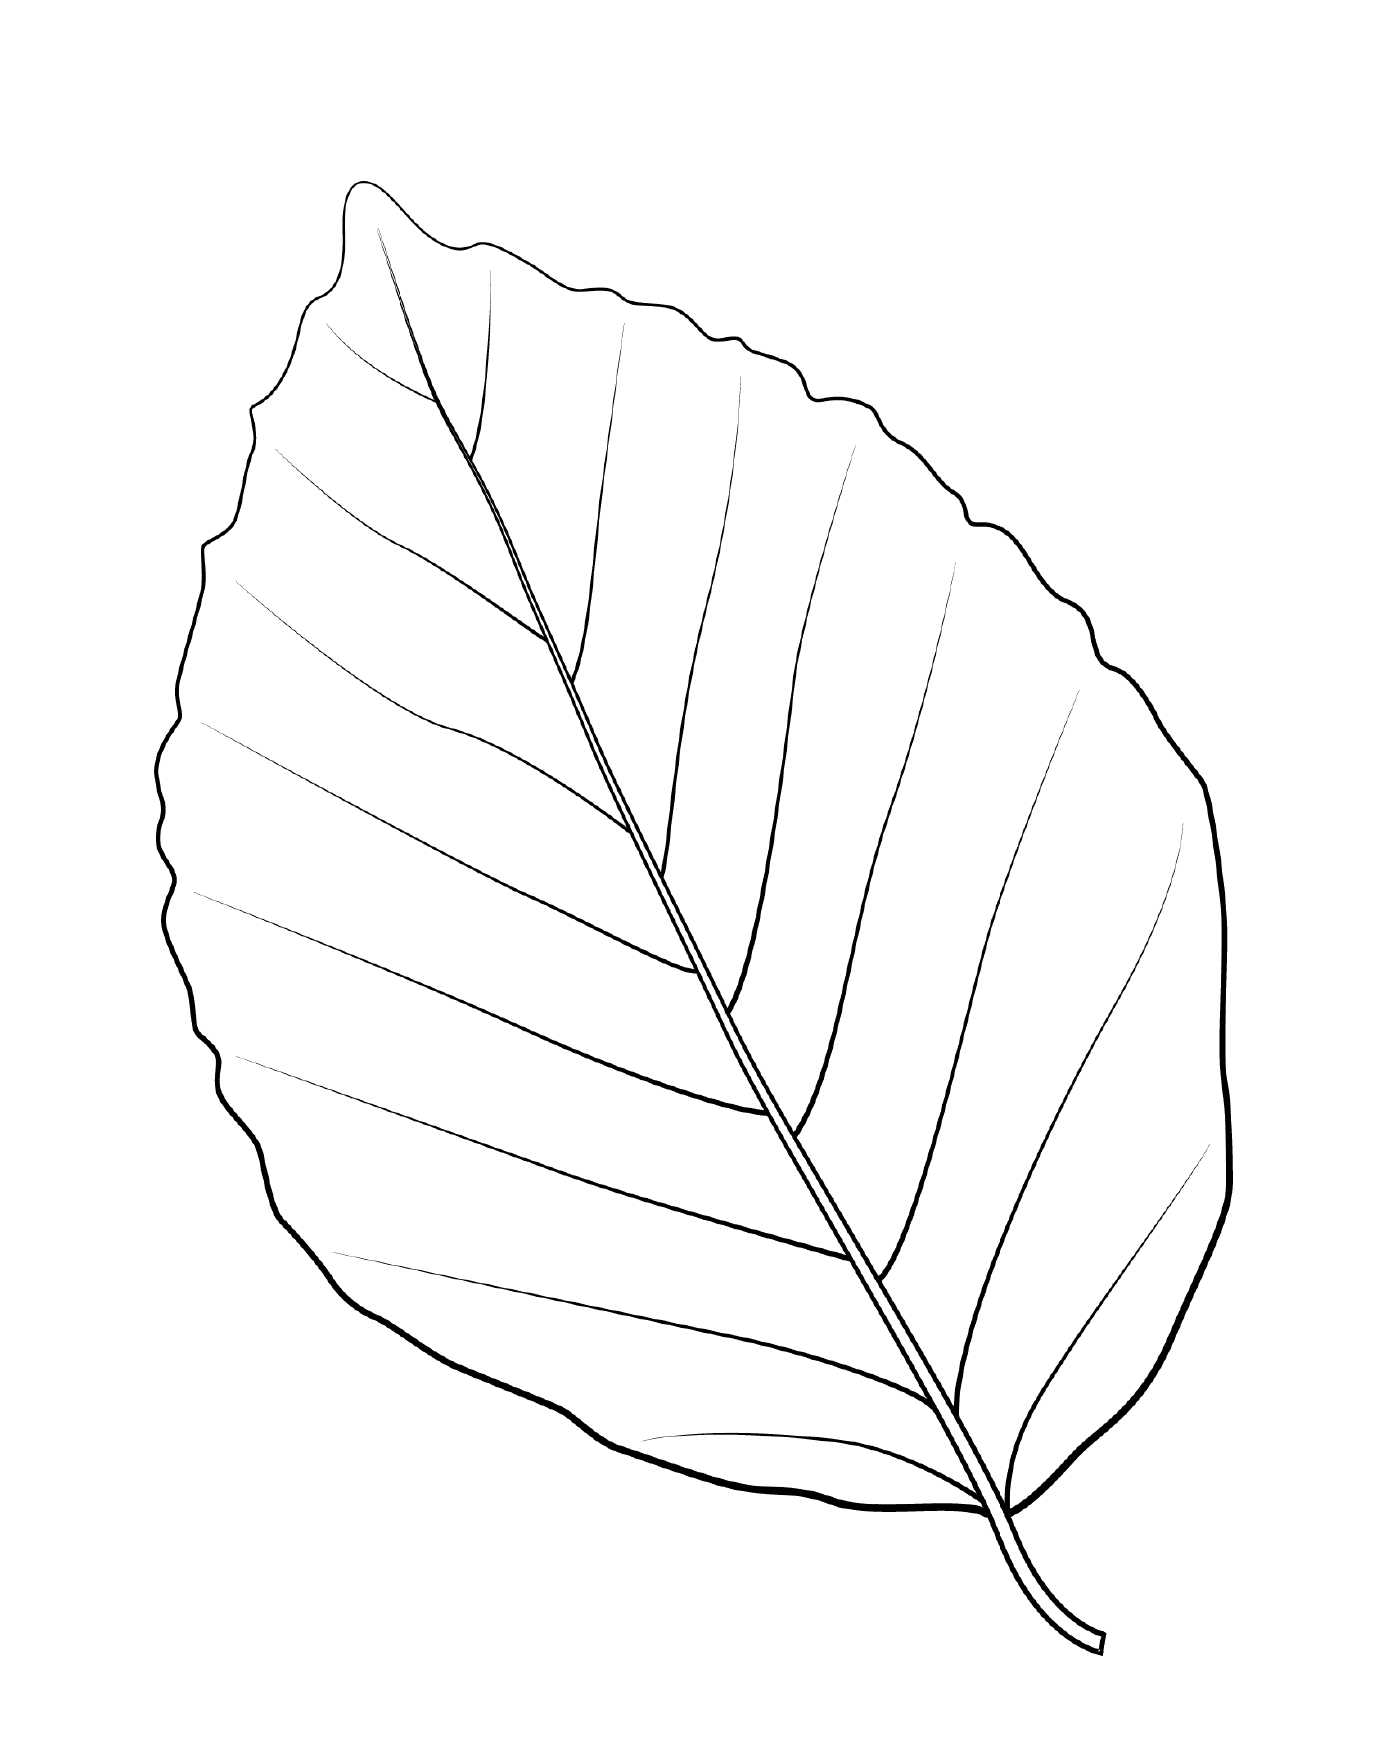  Copper beech leaf 